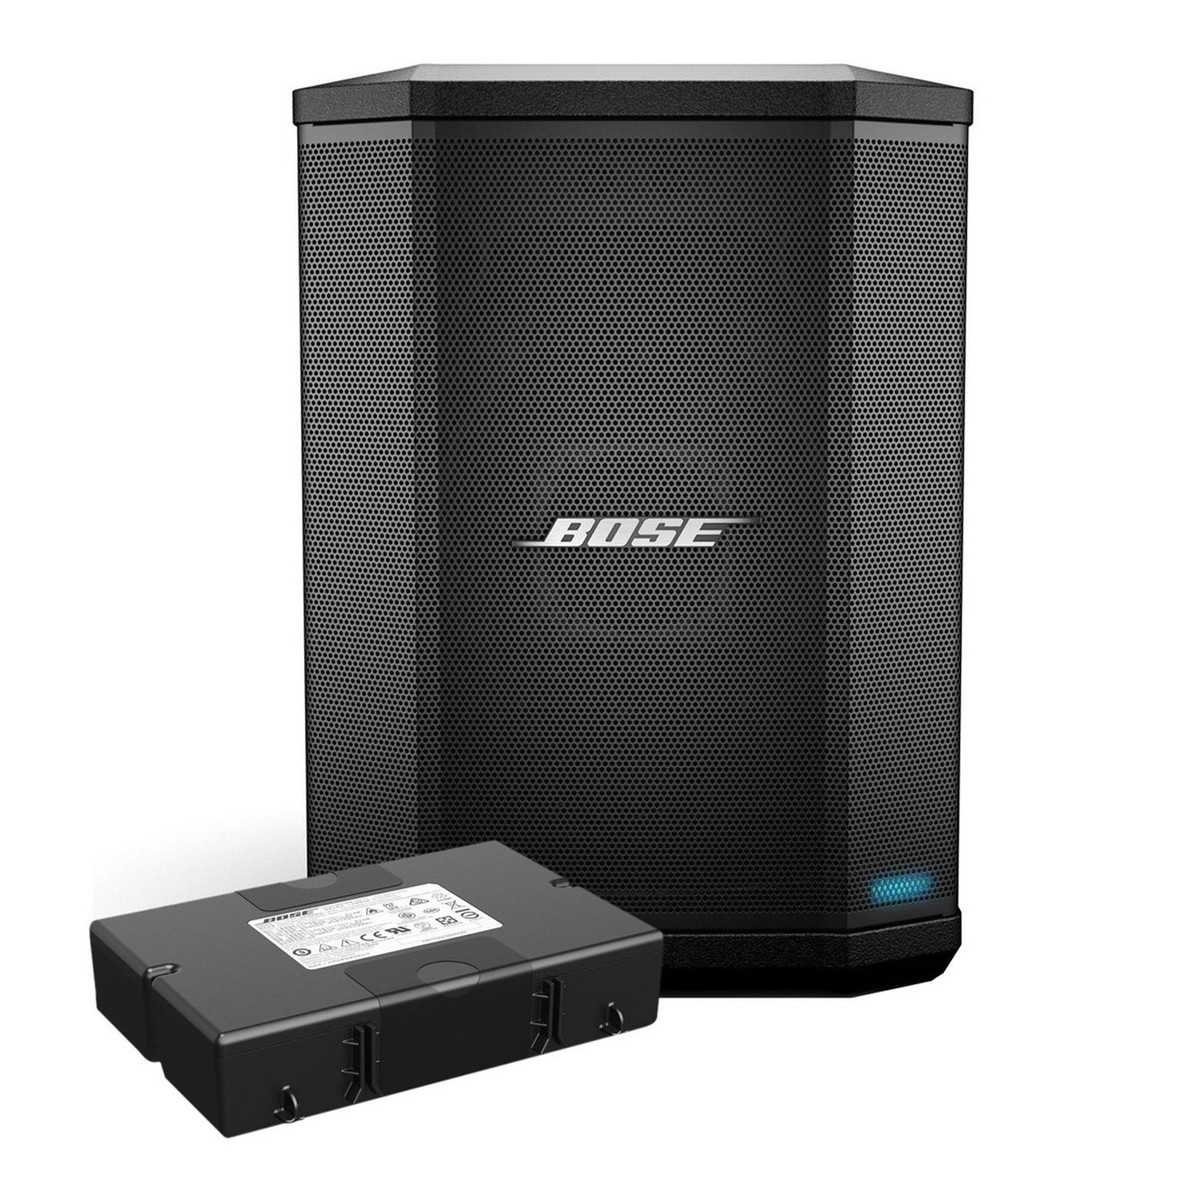 Bose s1. Bose s1 Pro System. Аккумулятор Bose s1 Pro. Bose-s008xm0500160. Bose s1 Pro чехол.